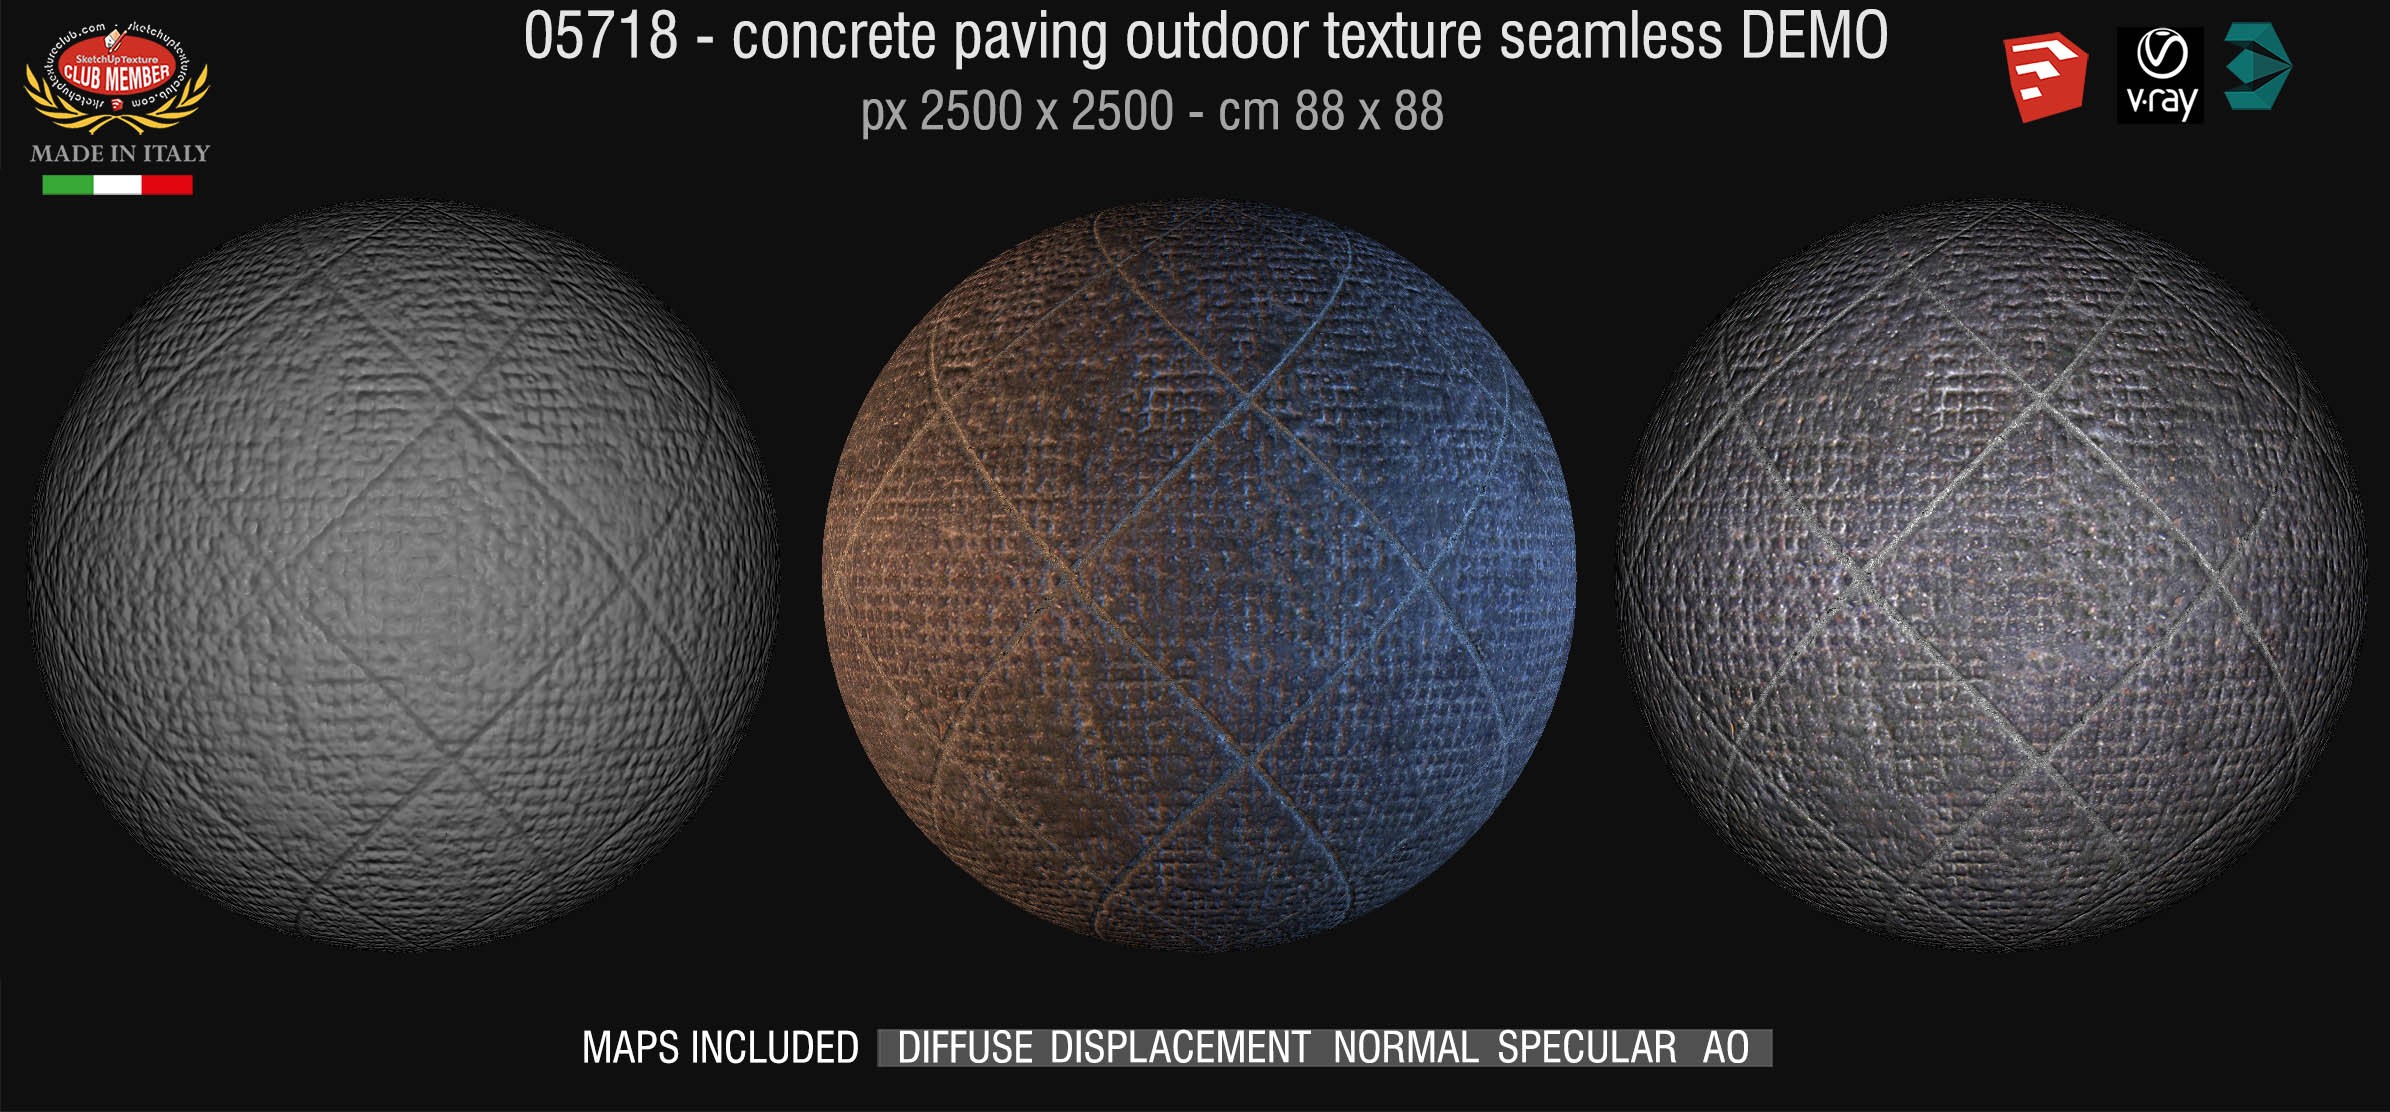 05718 HR Paving outdoor concrete regular block texture + maps DEMO